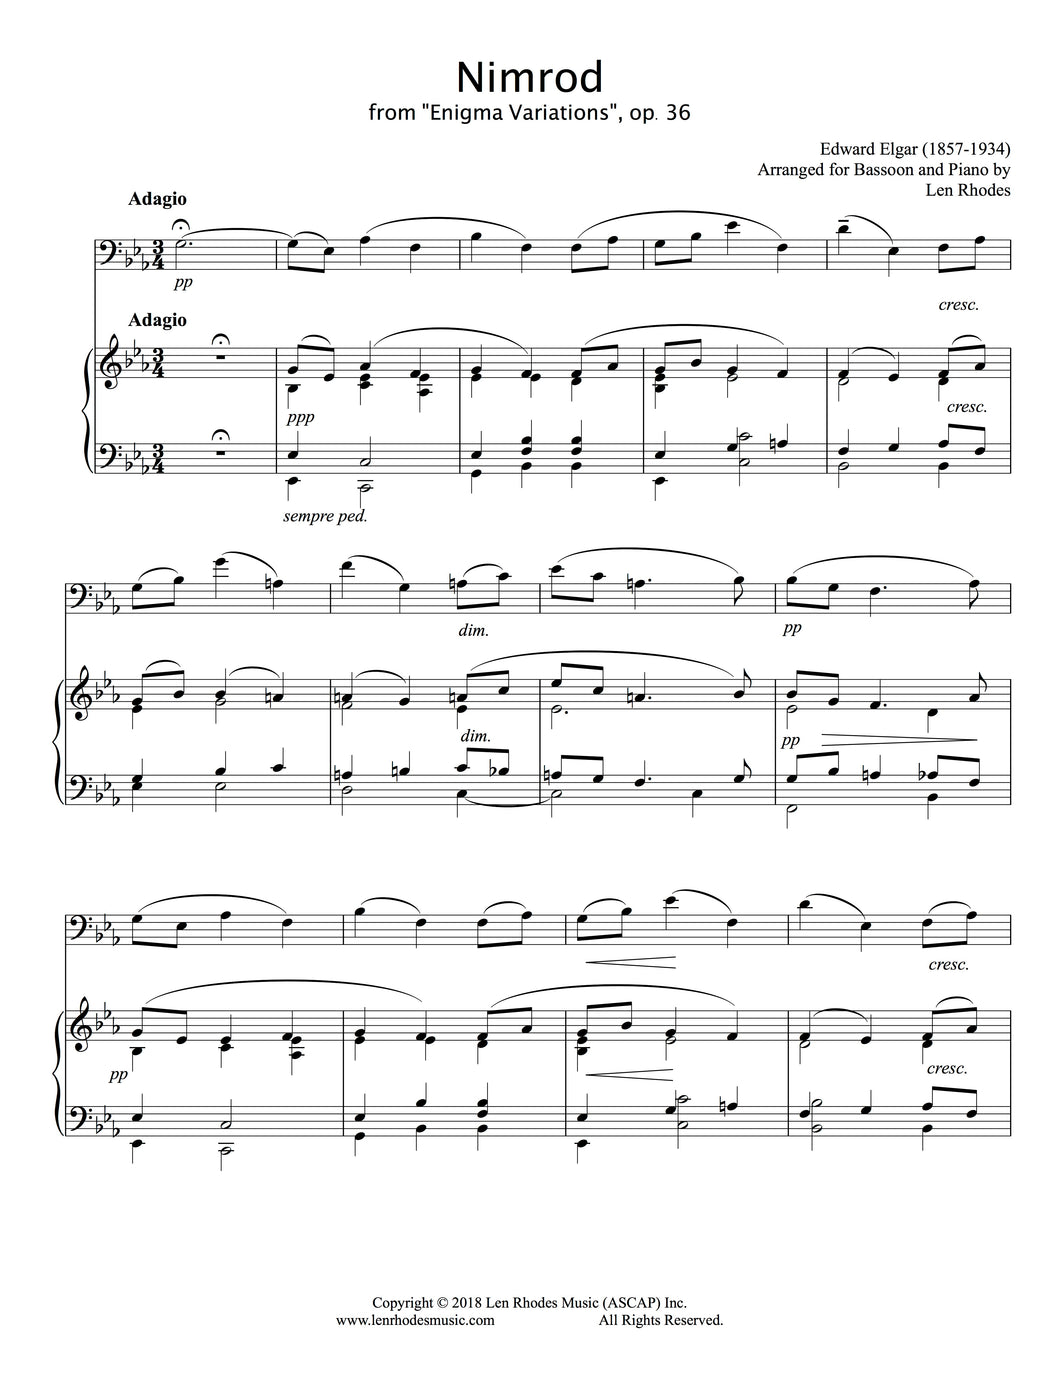 Nimrod, Enigma Variations, Elgar - Bassoon and Piano